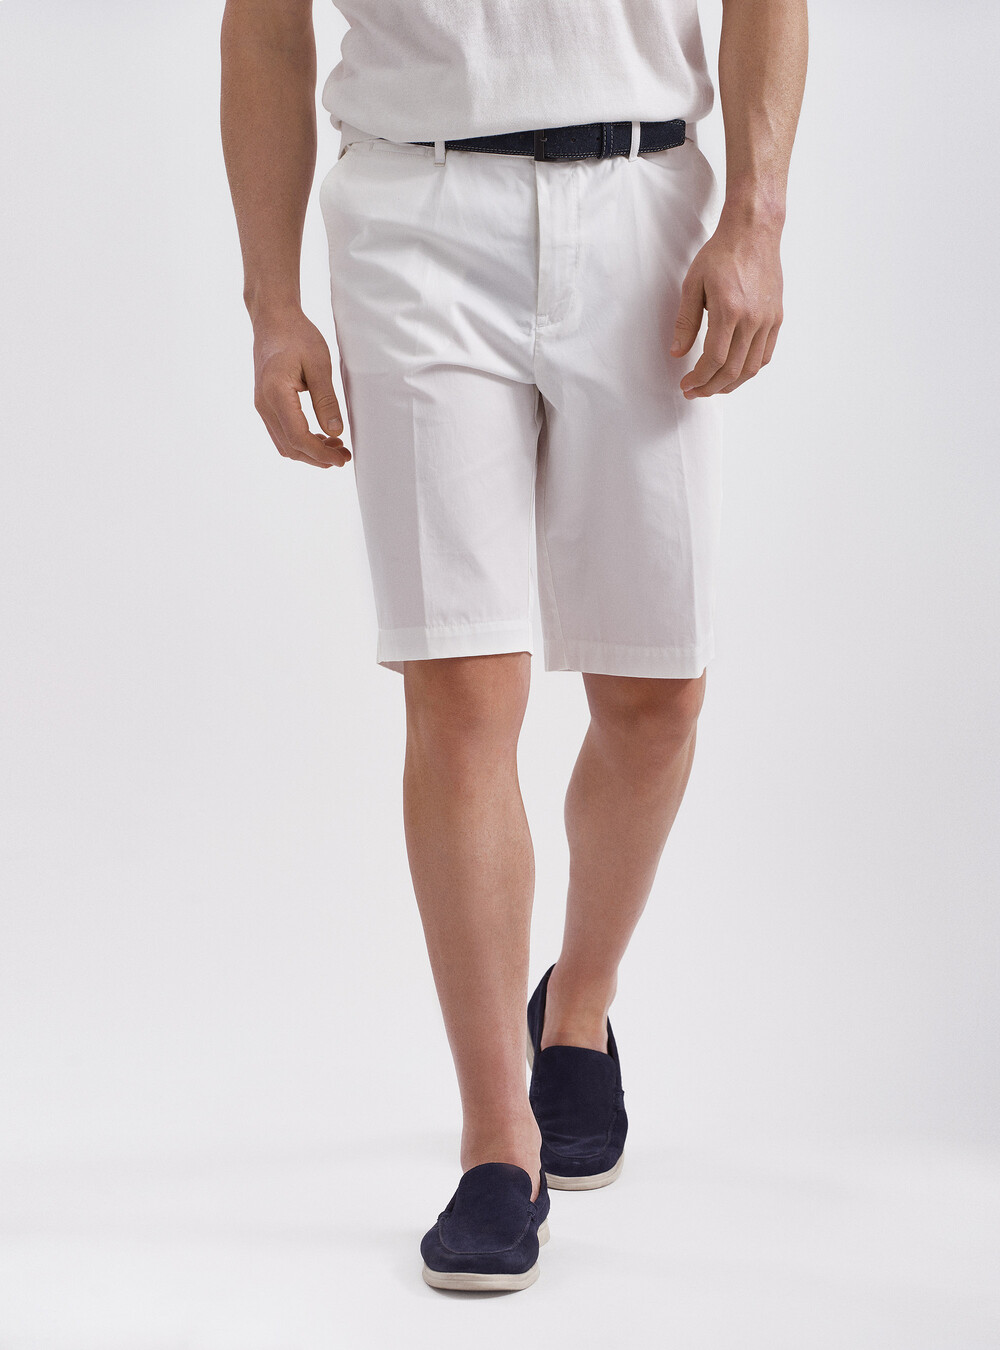 Bermuda shorts in light cotton twill